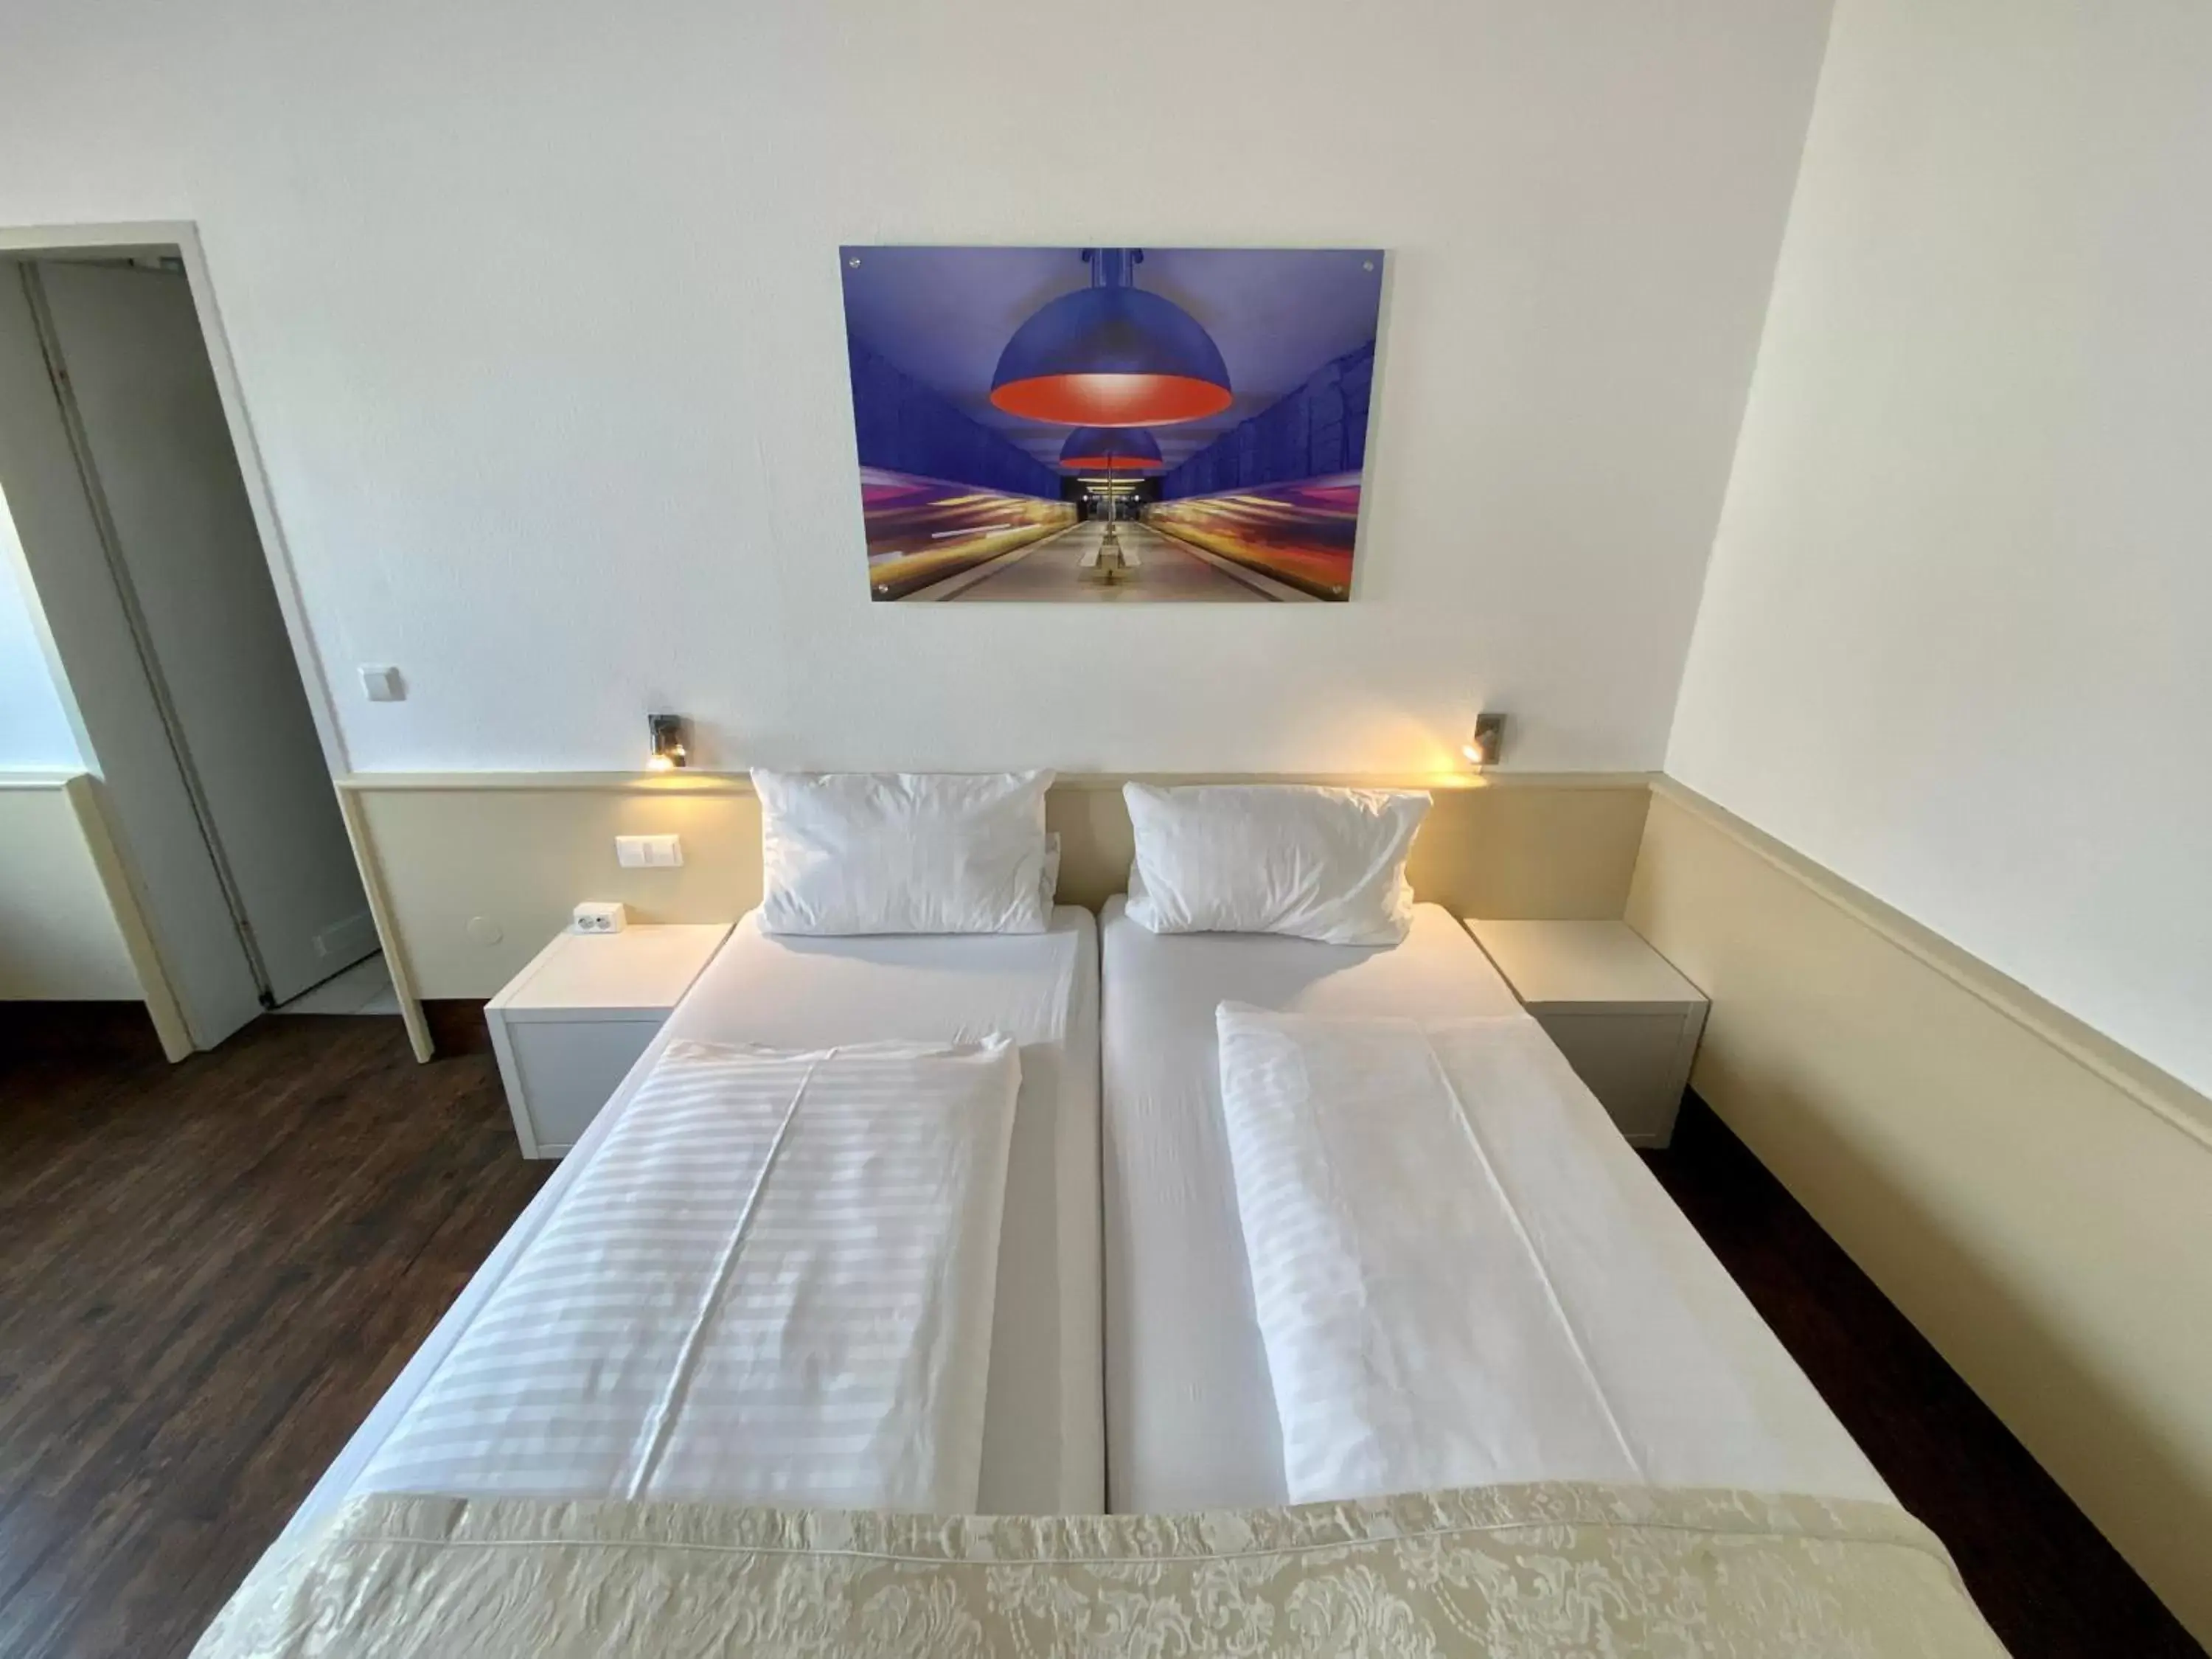 Bed in THE 4YOU Hostel & Hotel Munich